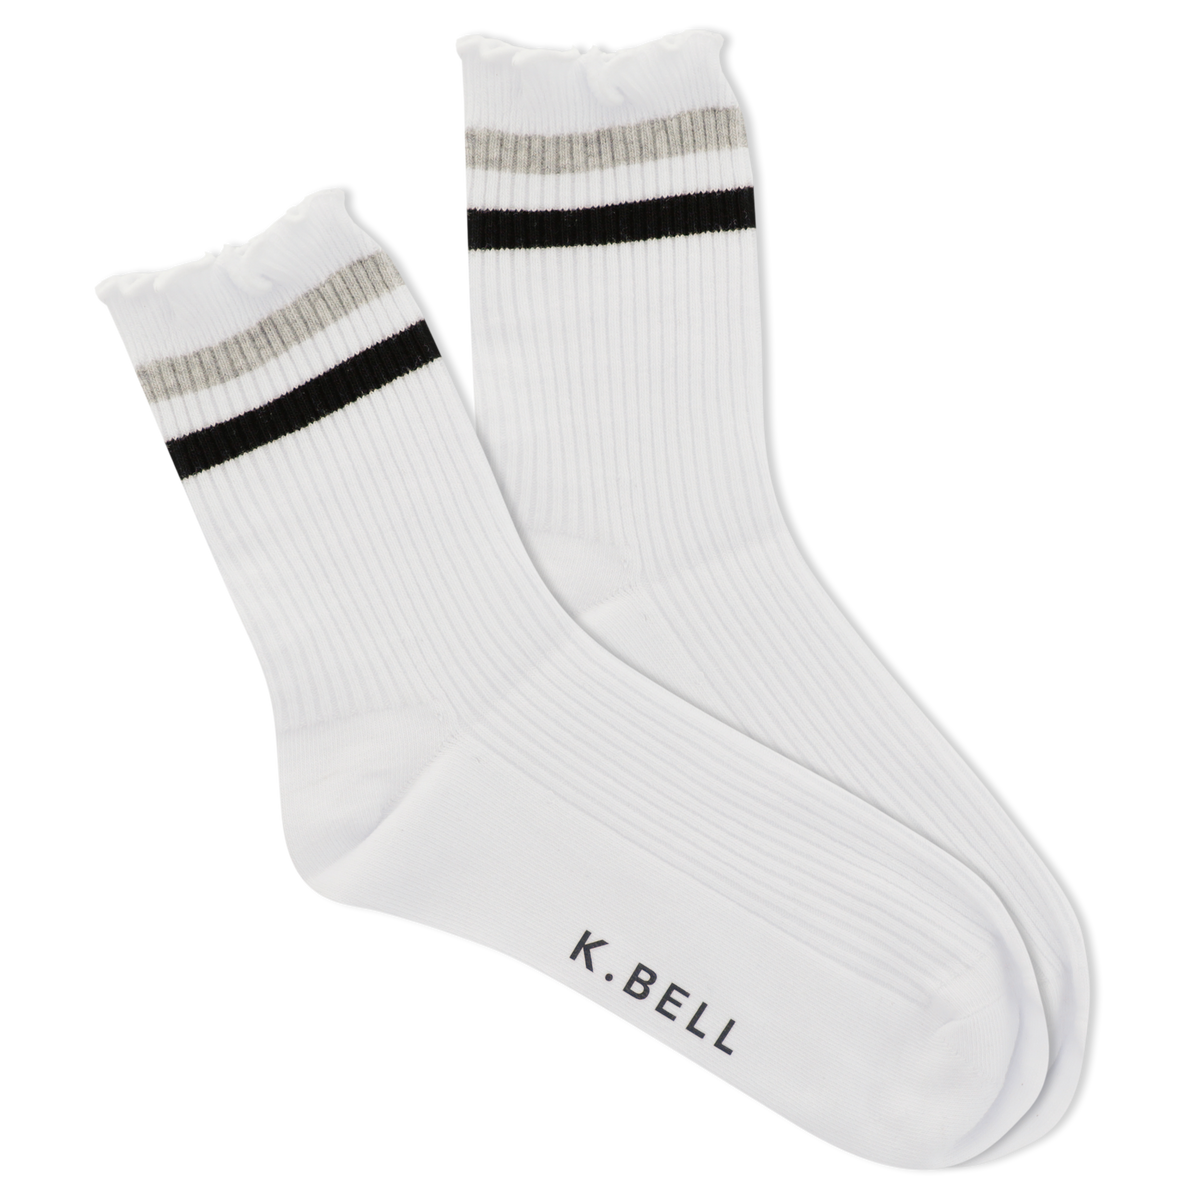 K. Bell Socks - Fun Fashion Socks, Fleece Lined Leggings, Novelty Sock ...